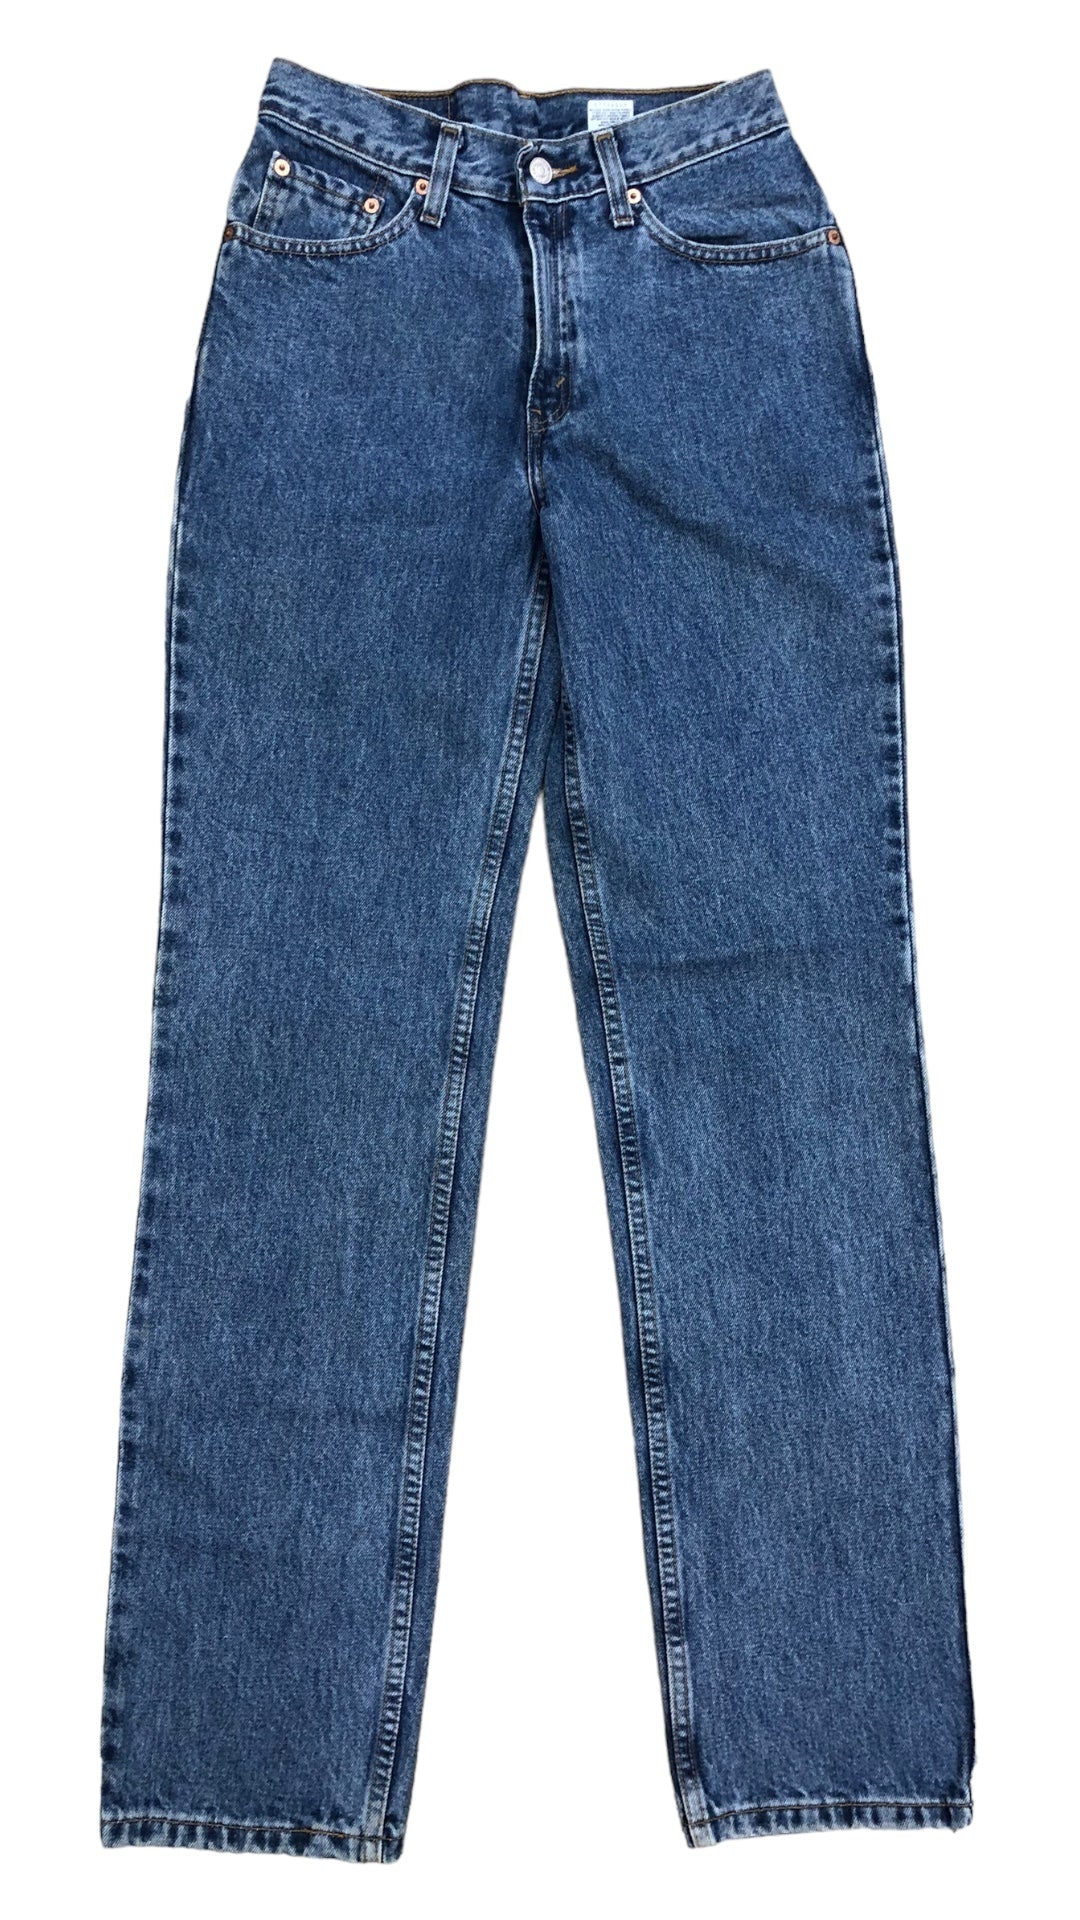 VTG Levi's 512 Slim Straight Blue Denim Jeans Sz 27x33